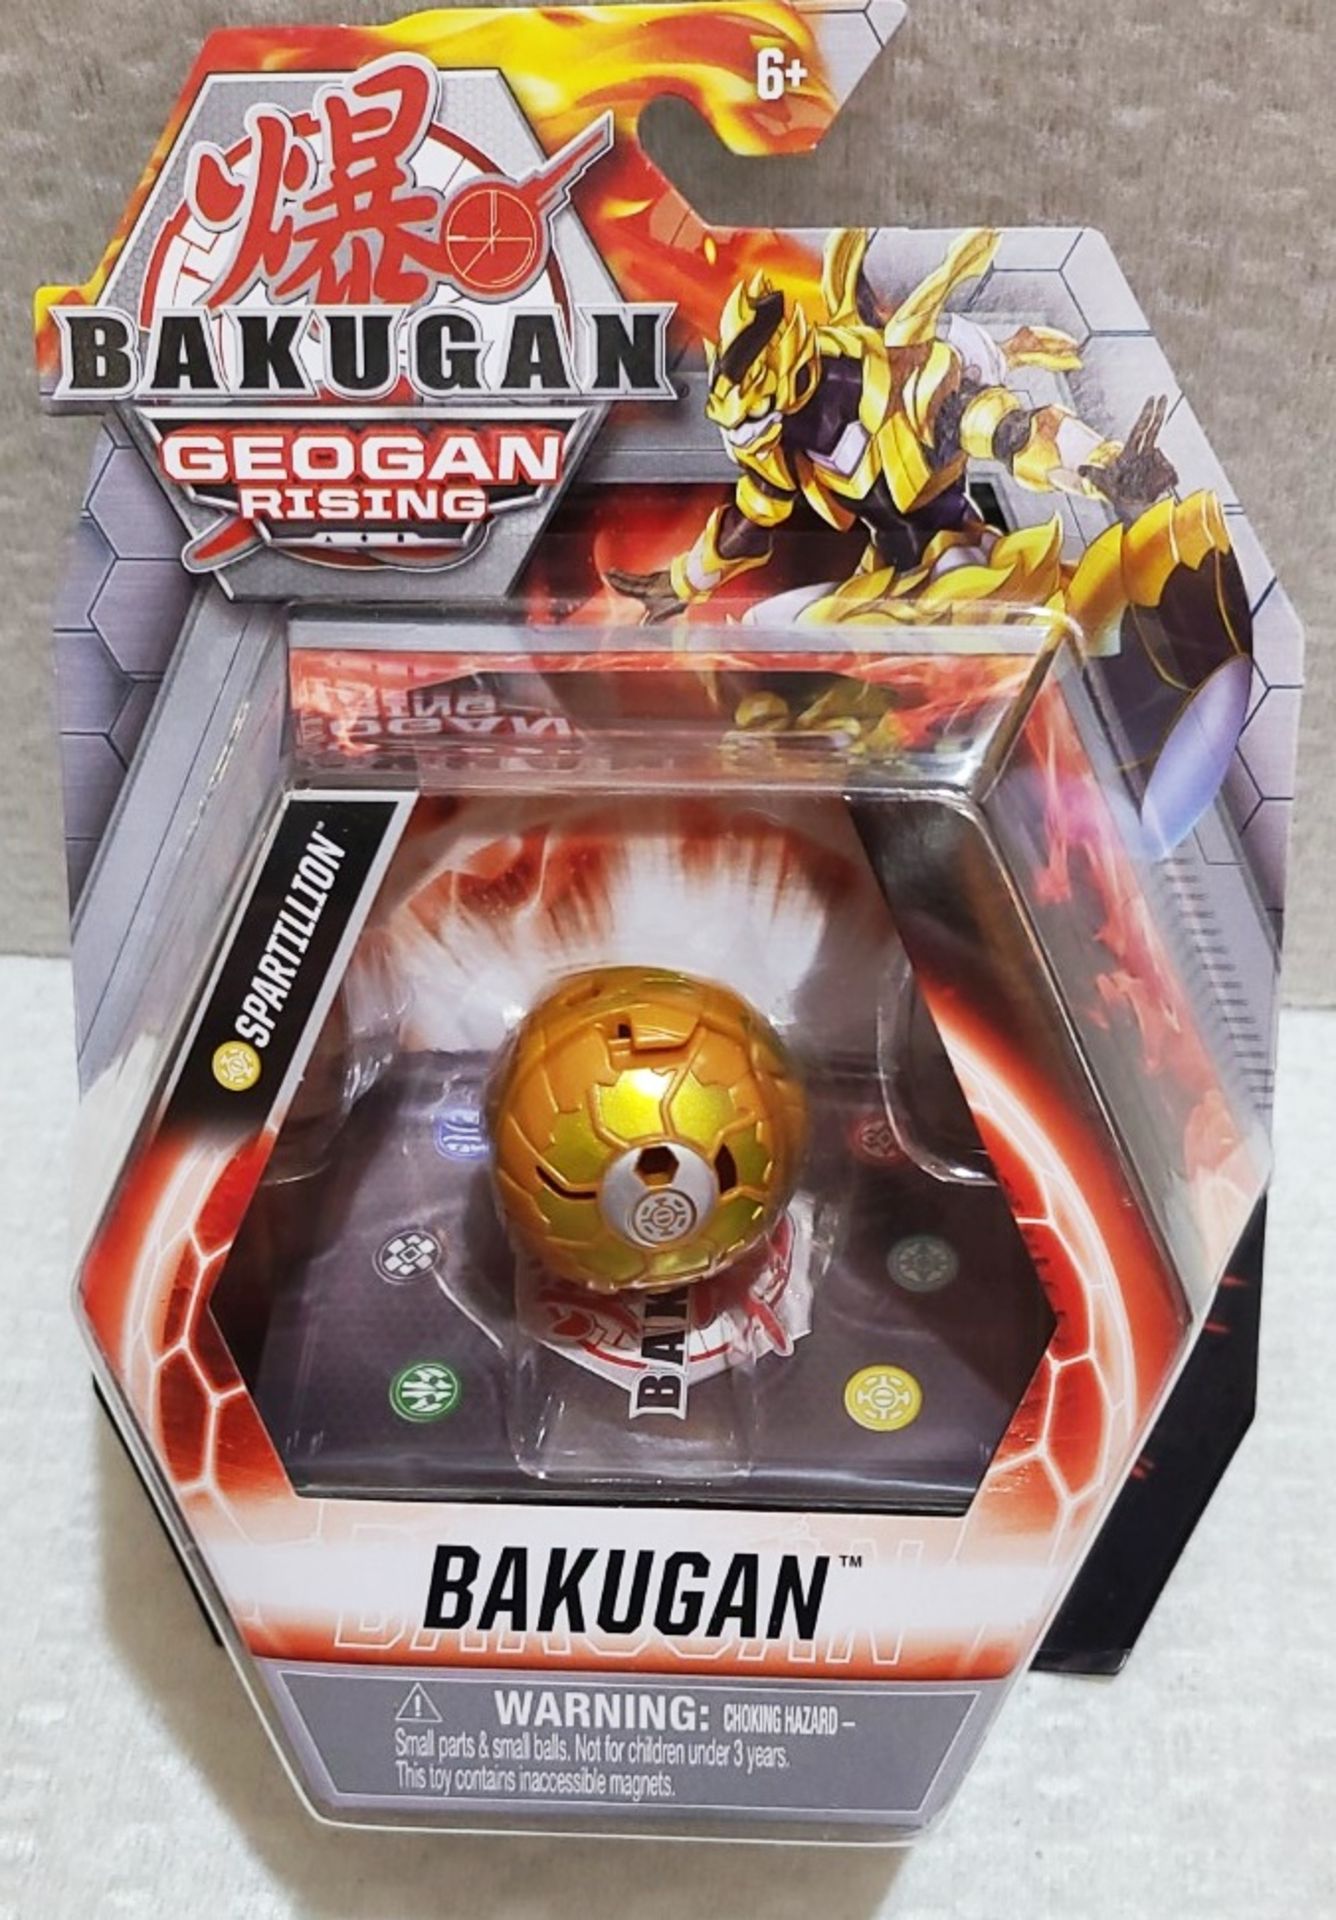 7 x BAKUGAN Bakugan Geogan Rising - Core Collectible Action Figures - Image 10 of 11